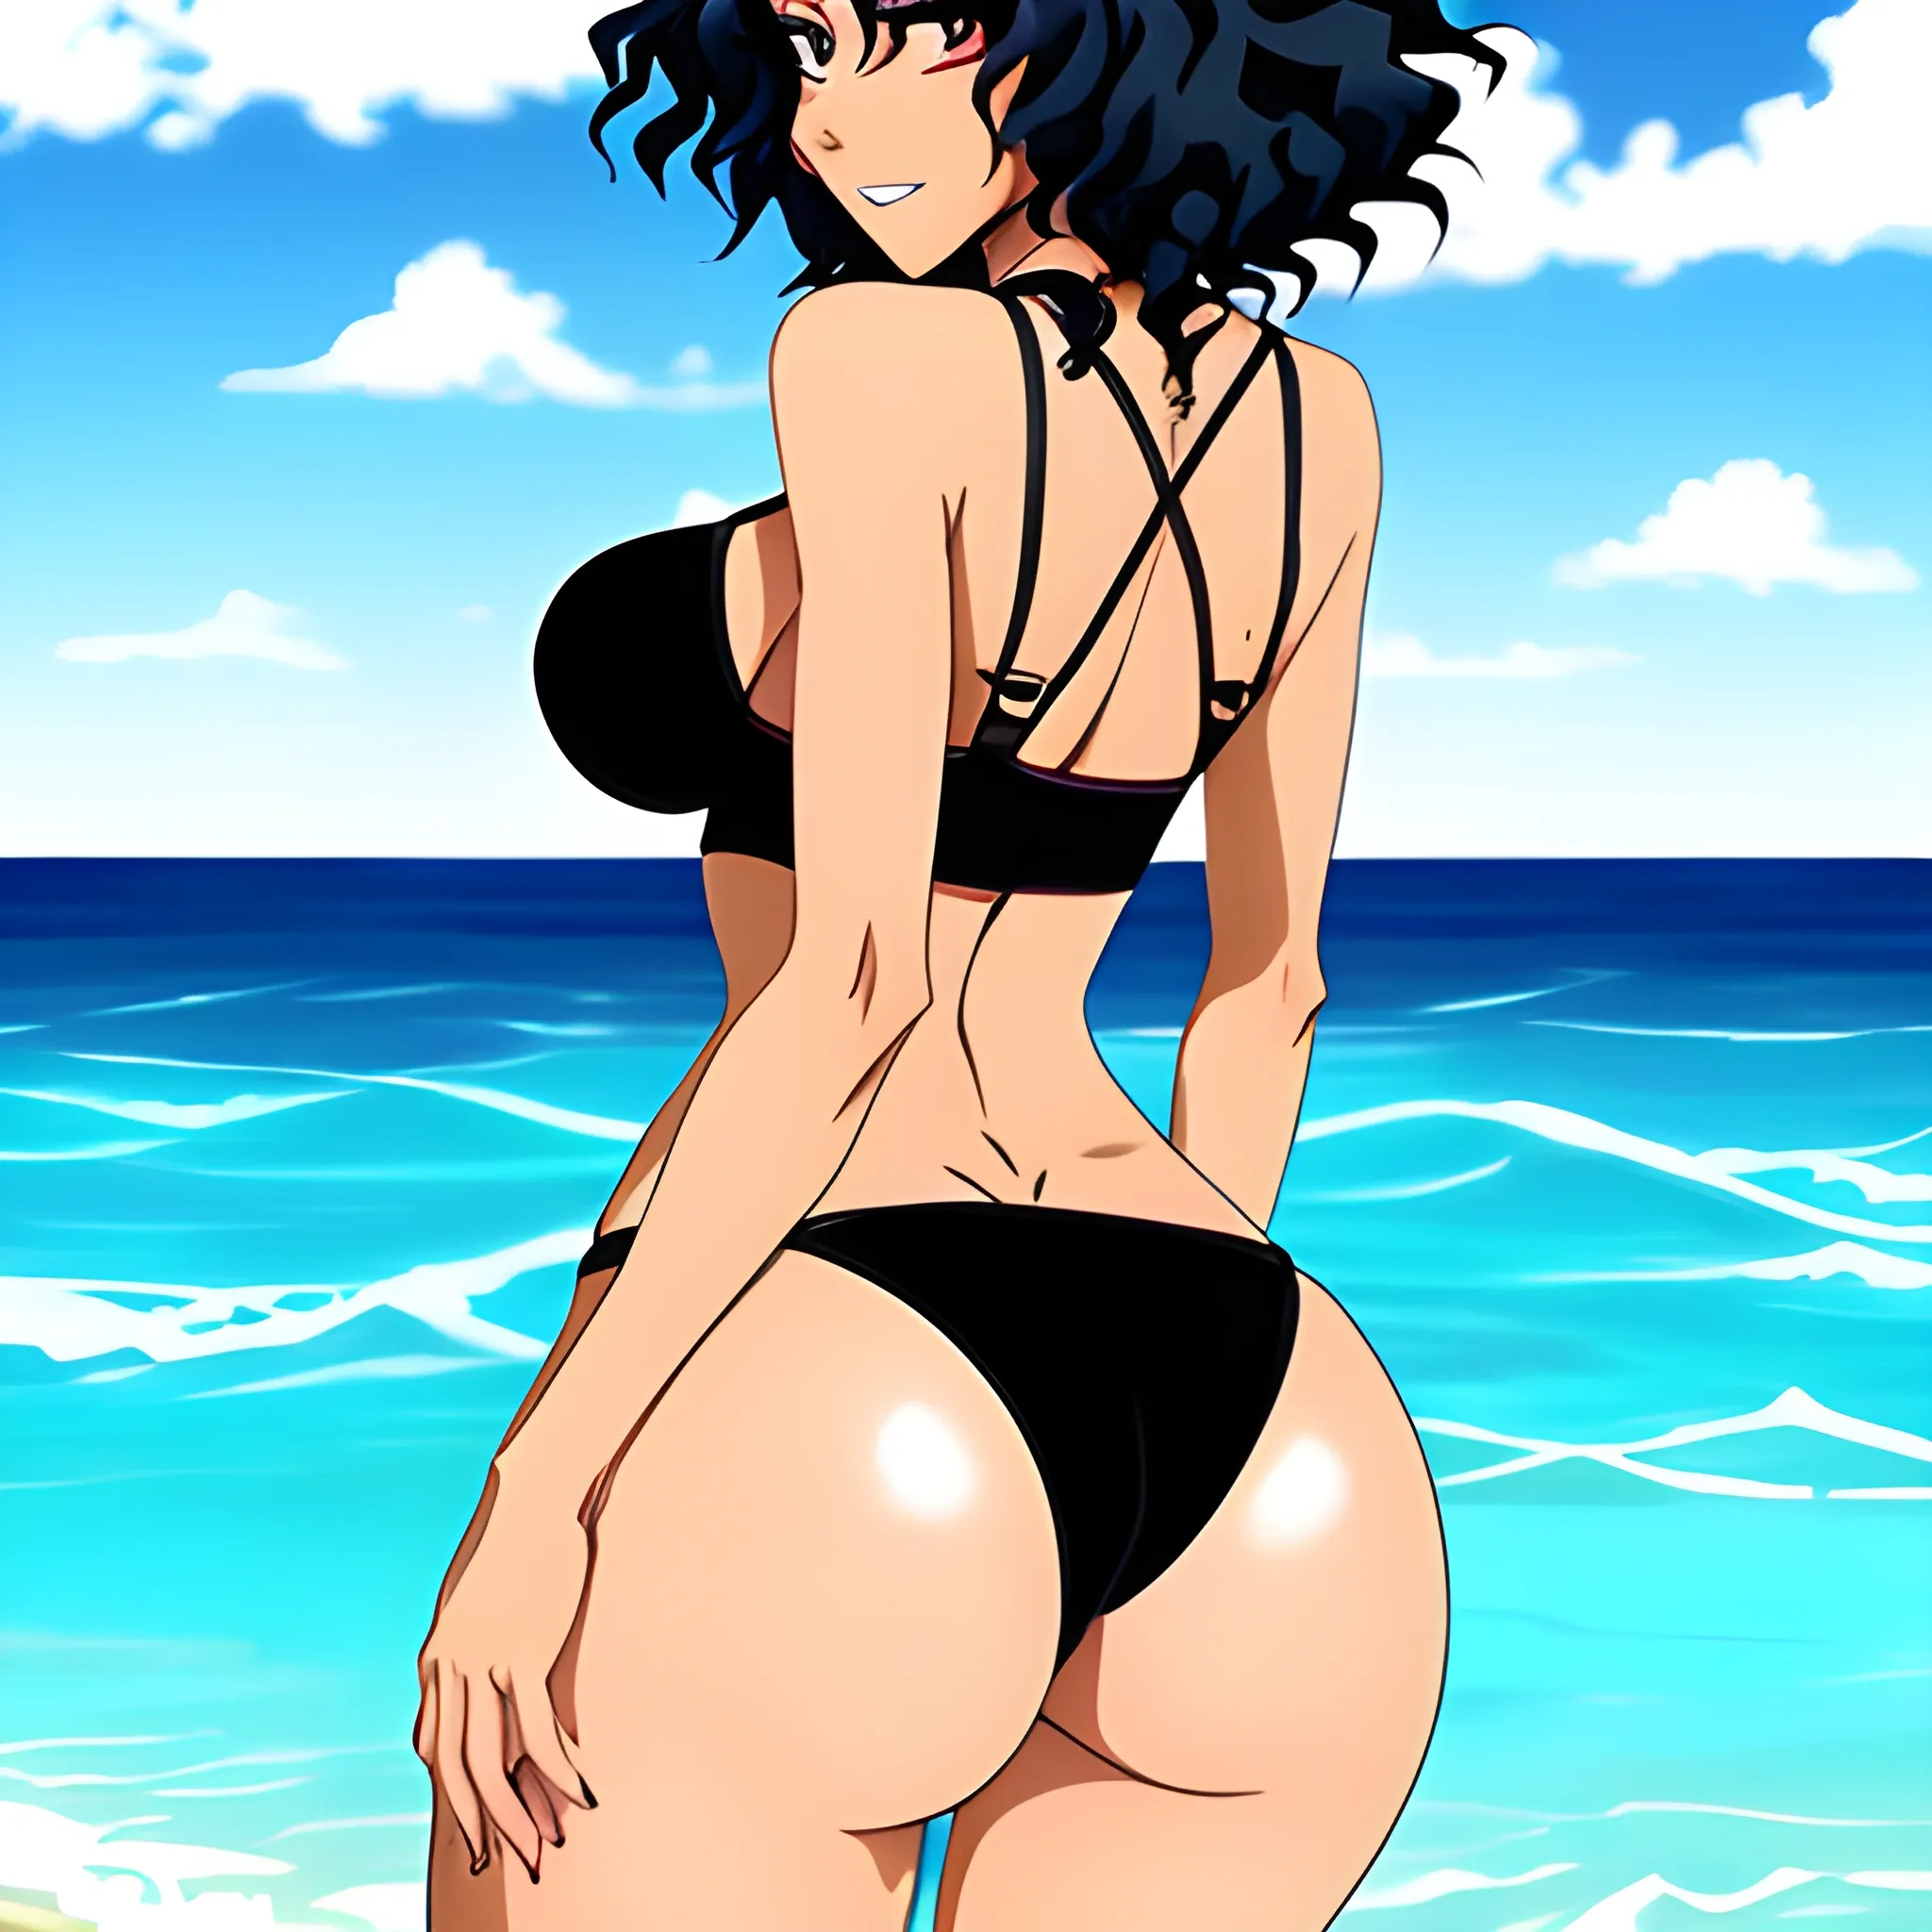 Anime,beach,rear view, blackskin,cute girl,black curly hair,blue bra, blue panties,cartoon,hand under big butt, , Cartoon,big breast, shark in water

